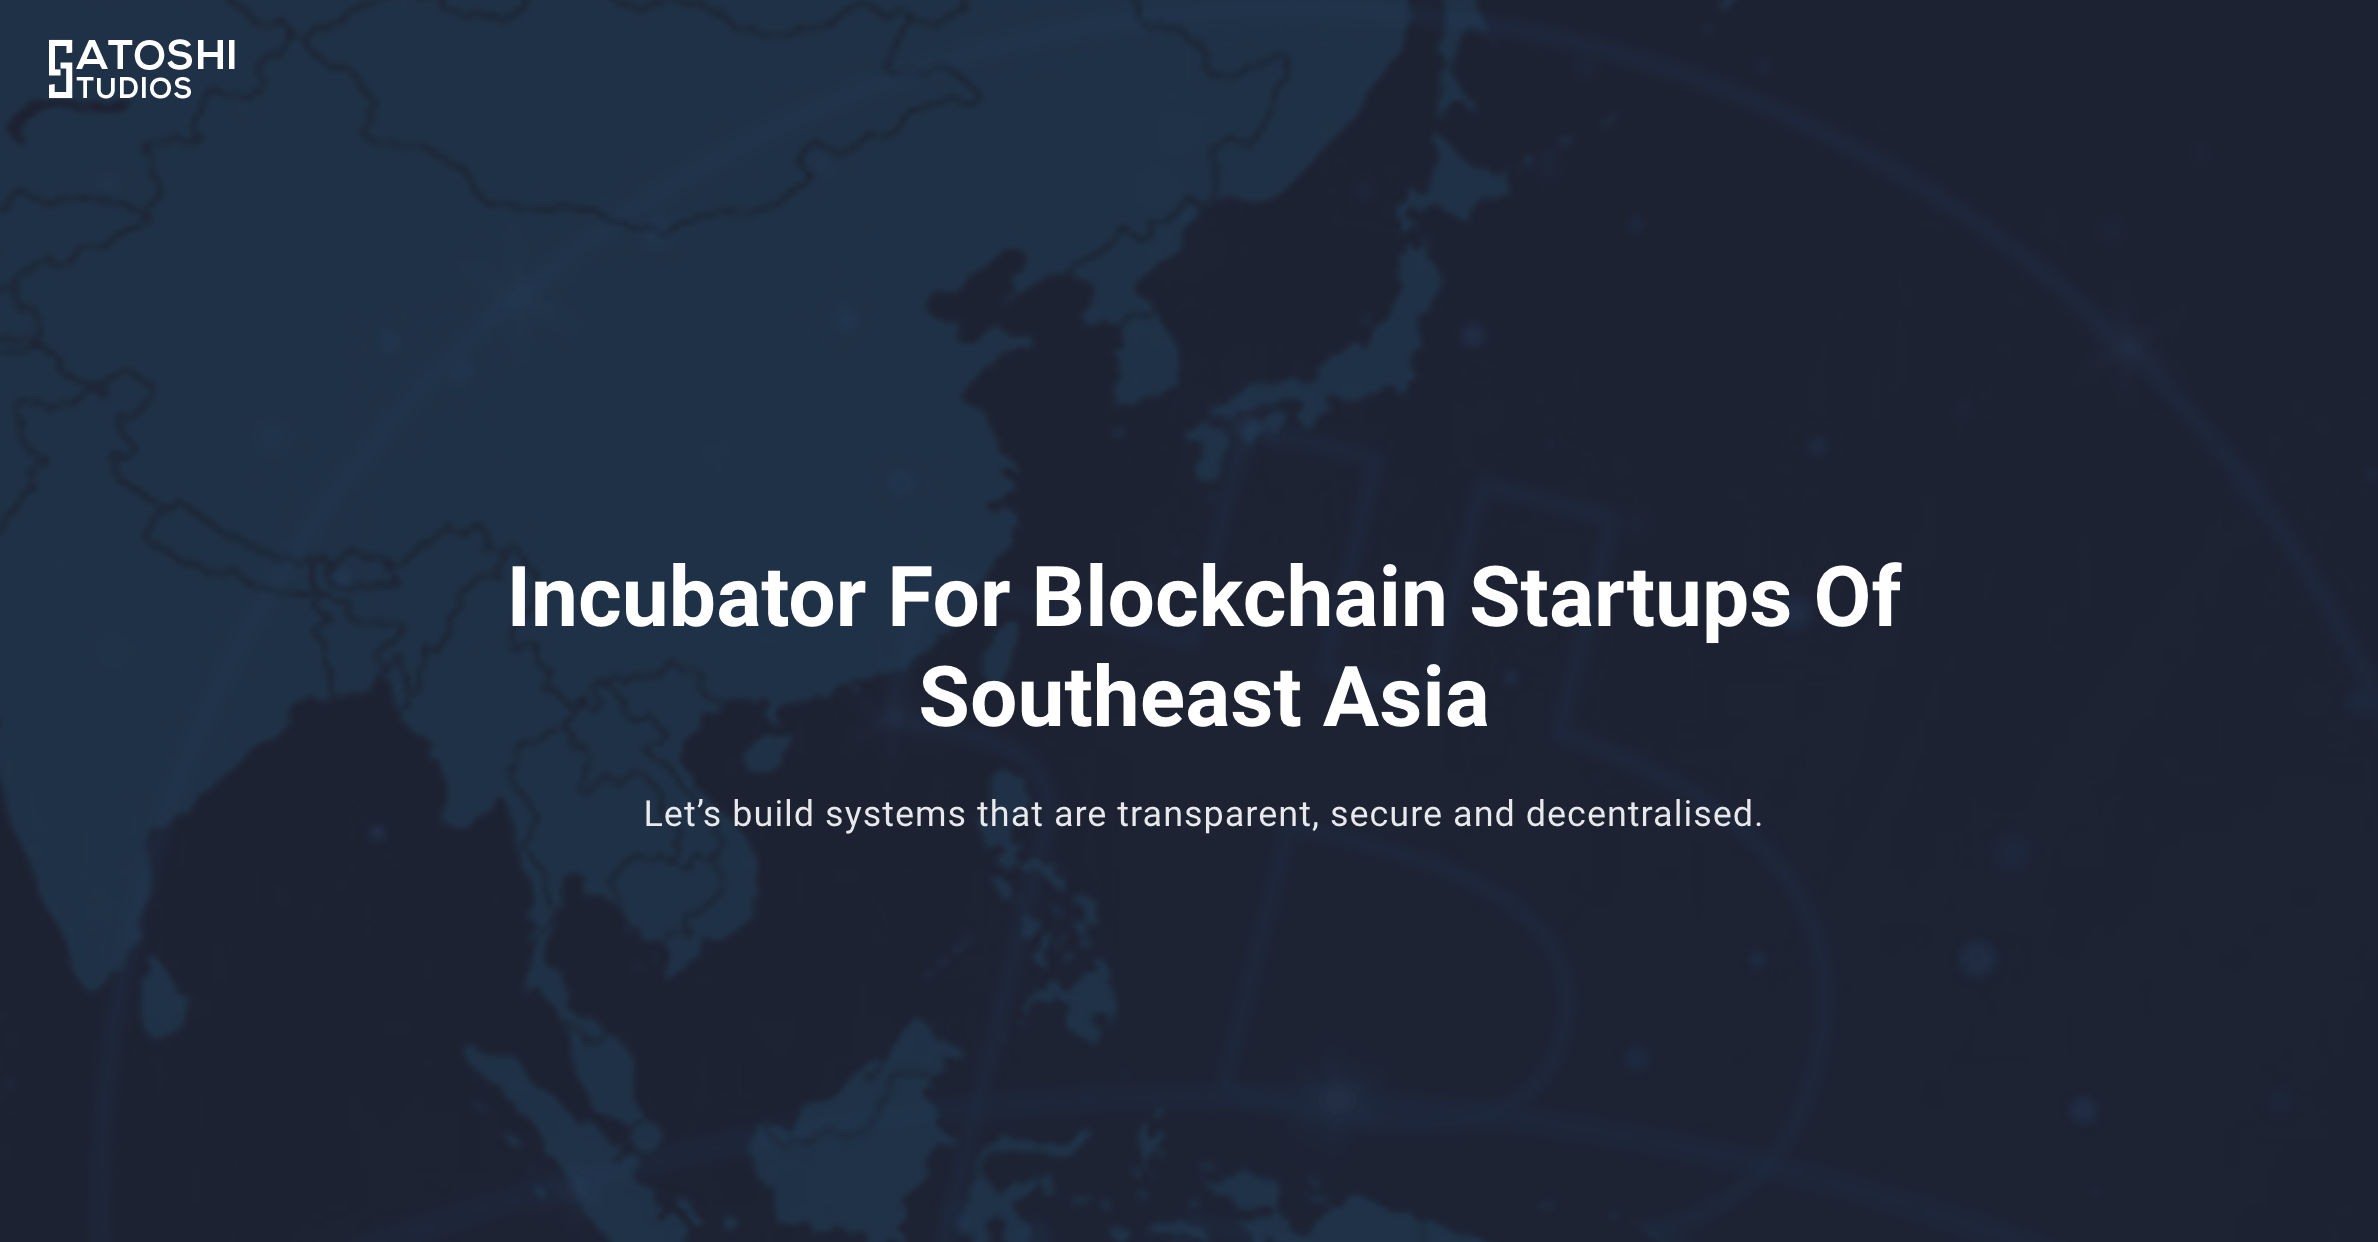 India’s Satoshi Studios Becomes South Asia’s Blockchain Incubator